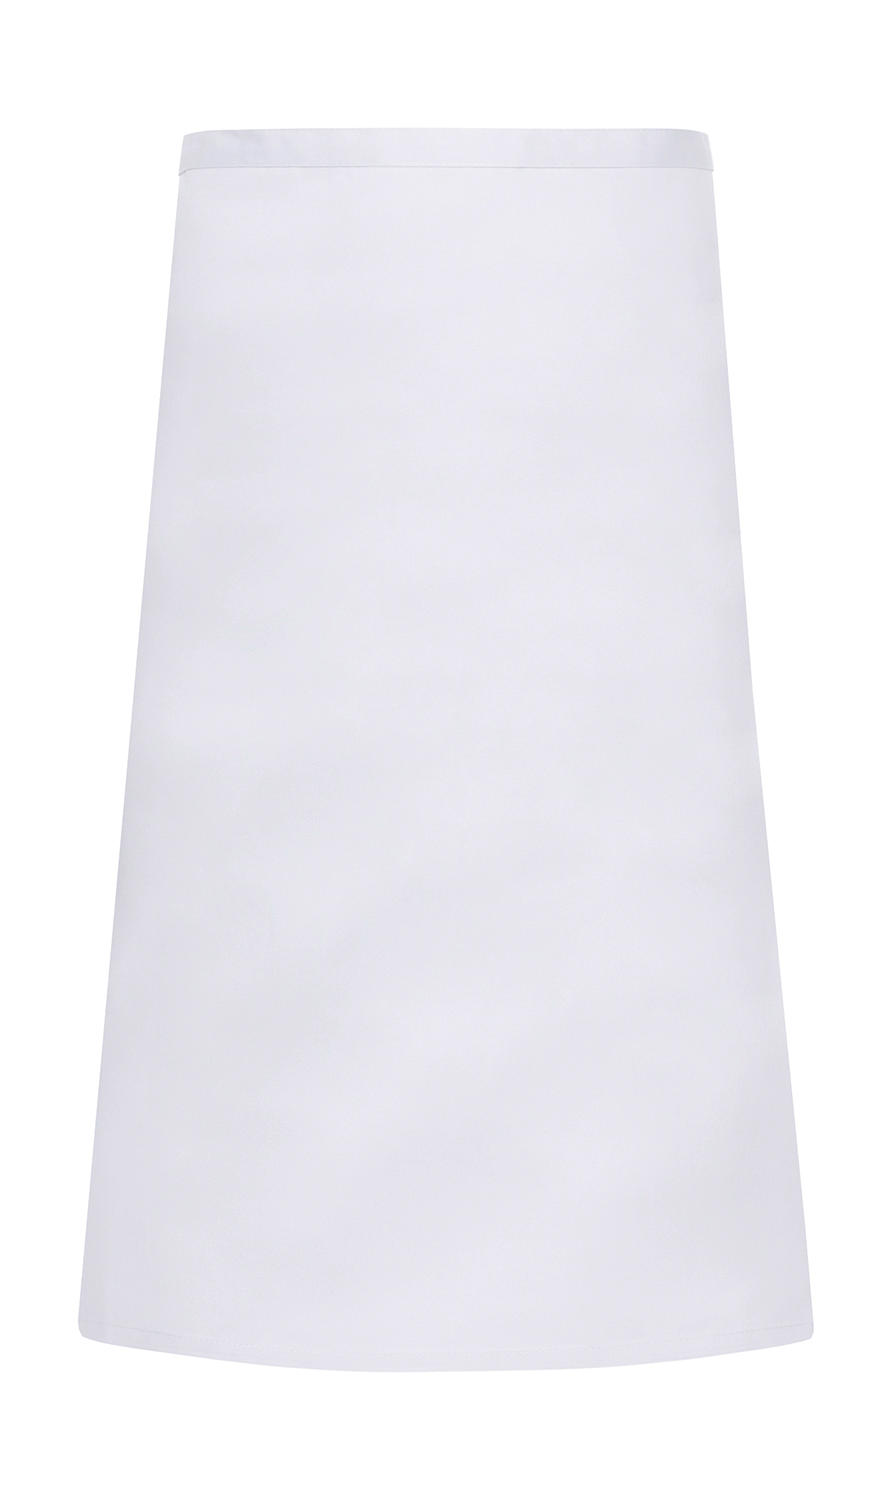  Basic Bistro Apron in Farbe White